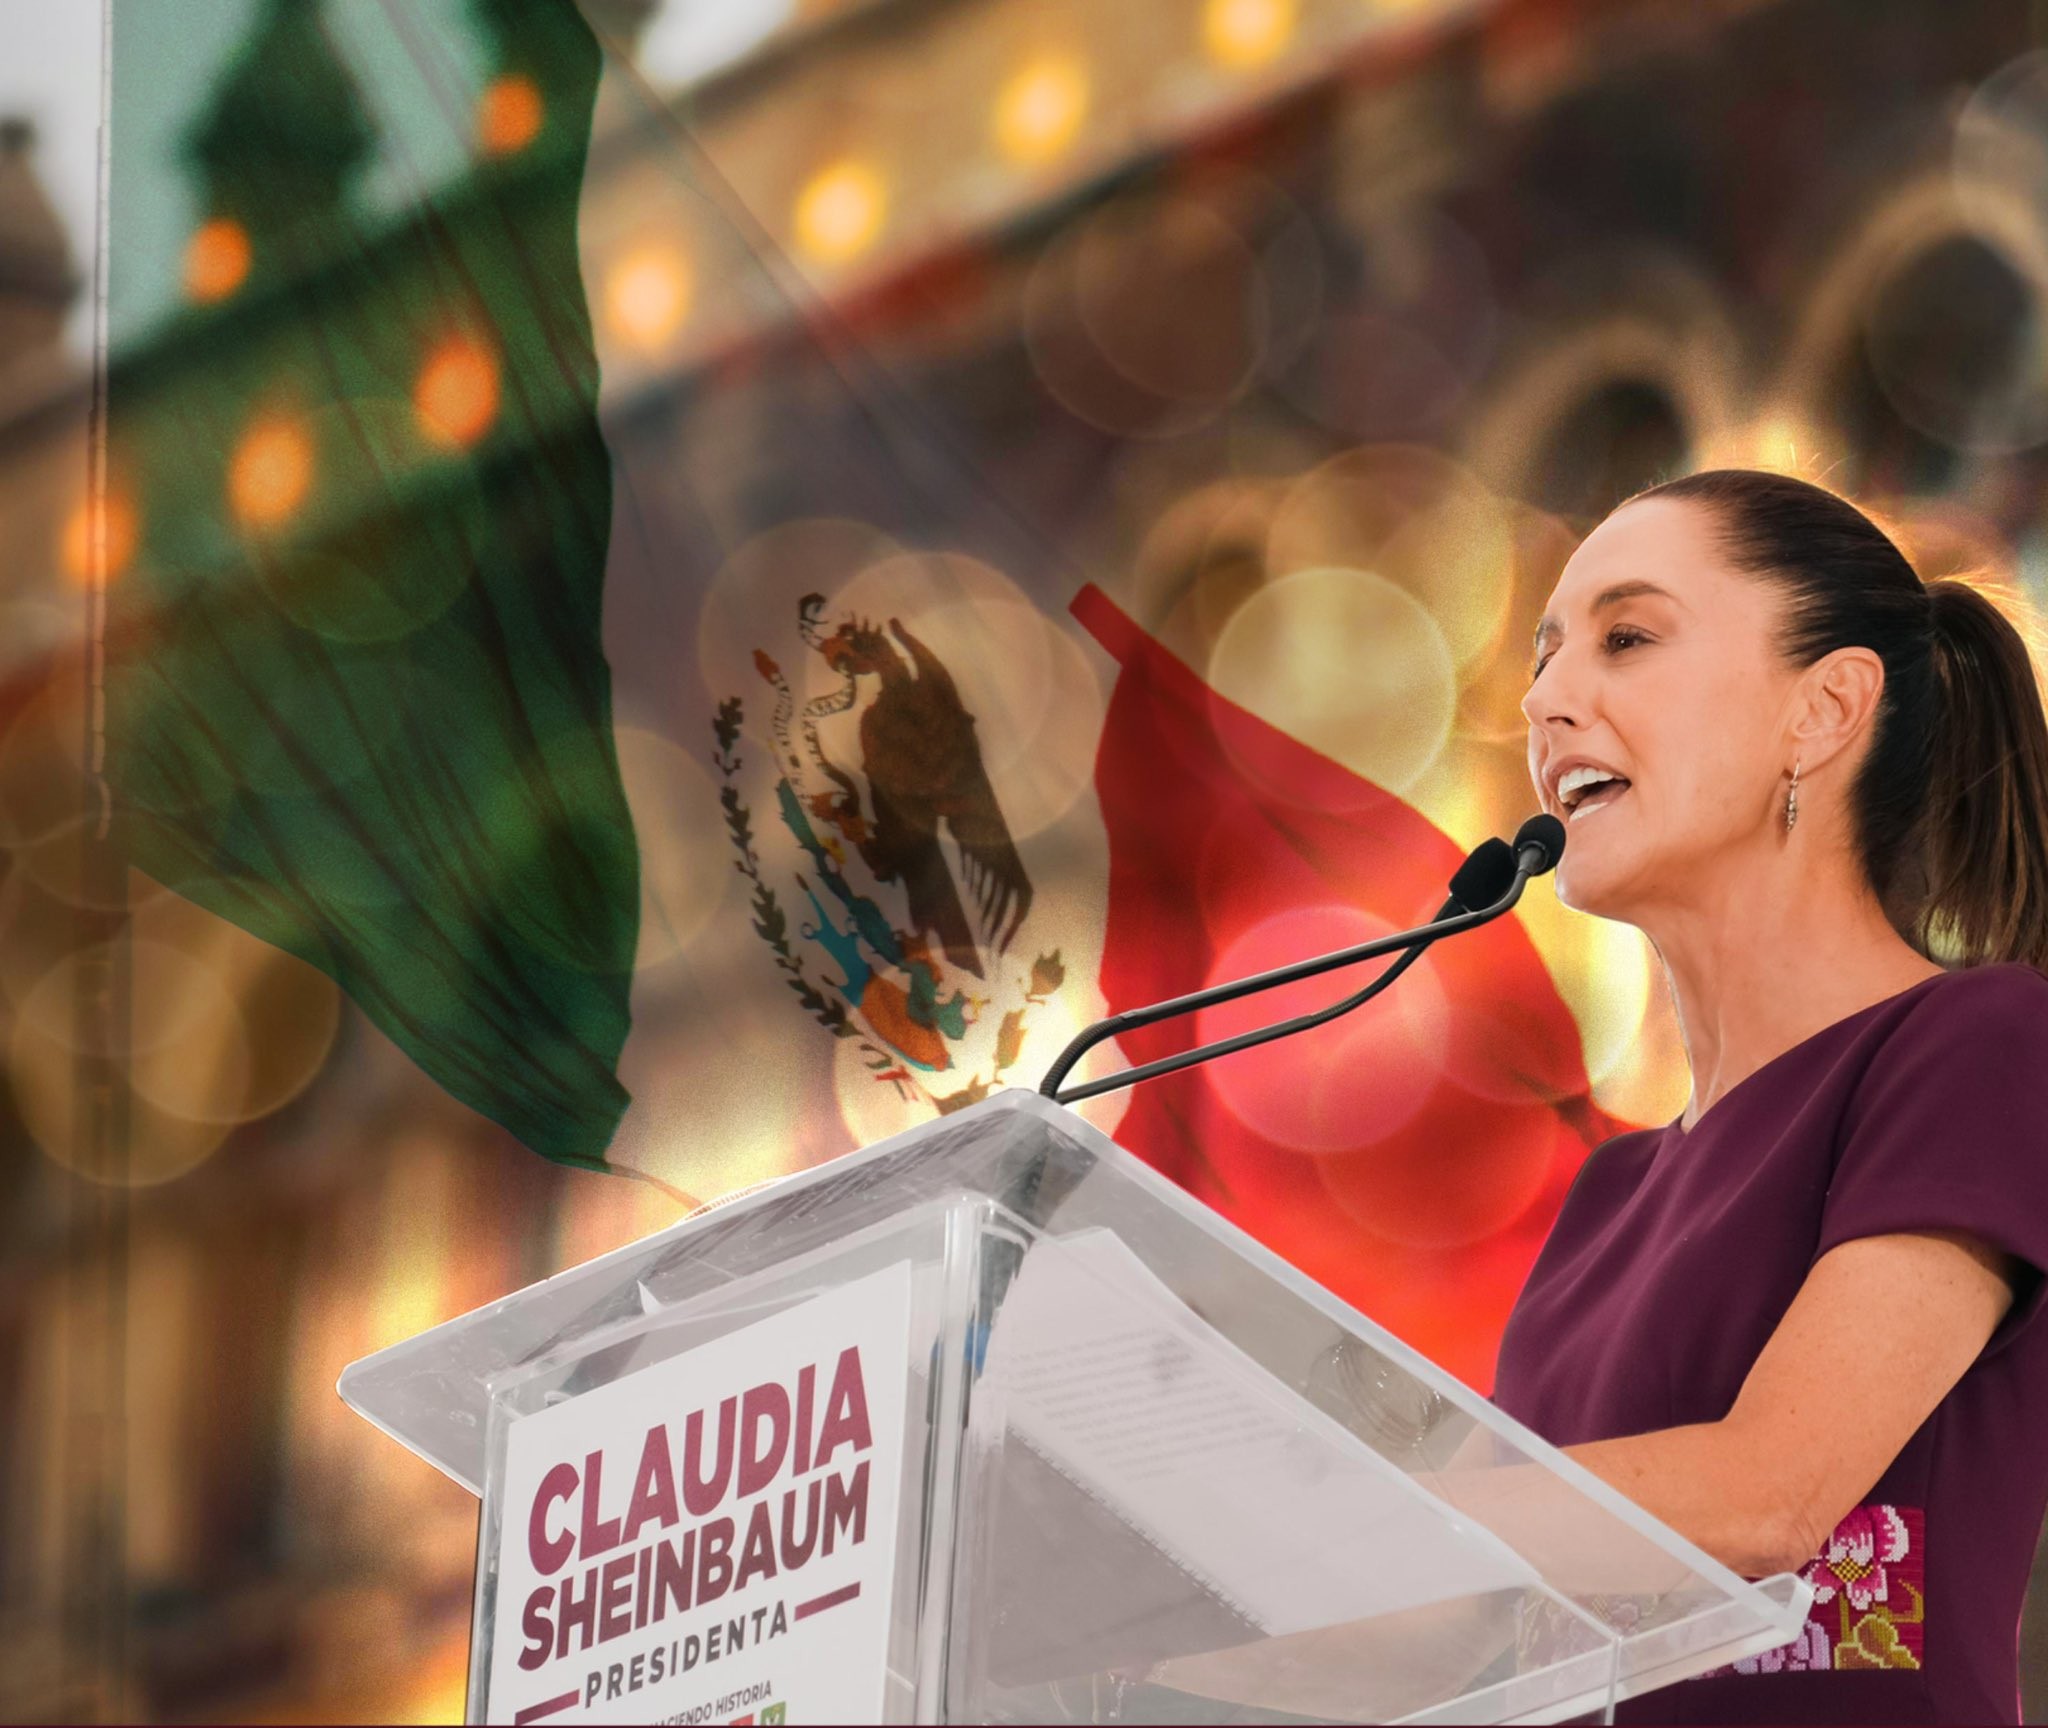 Claudia Sheinbaum será la próxima presidenta de México: conteo rápido le da ventaja de 31.7 a 32.1 puntos sobre Xóchitl Gálvez